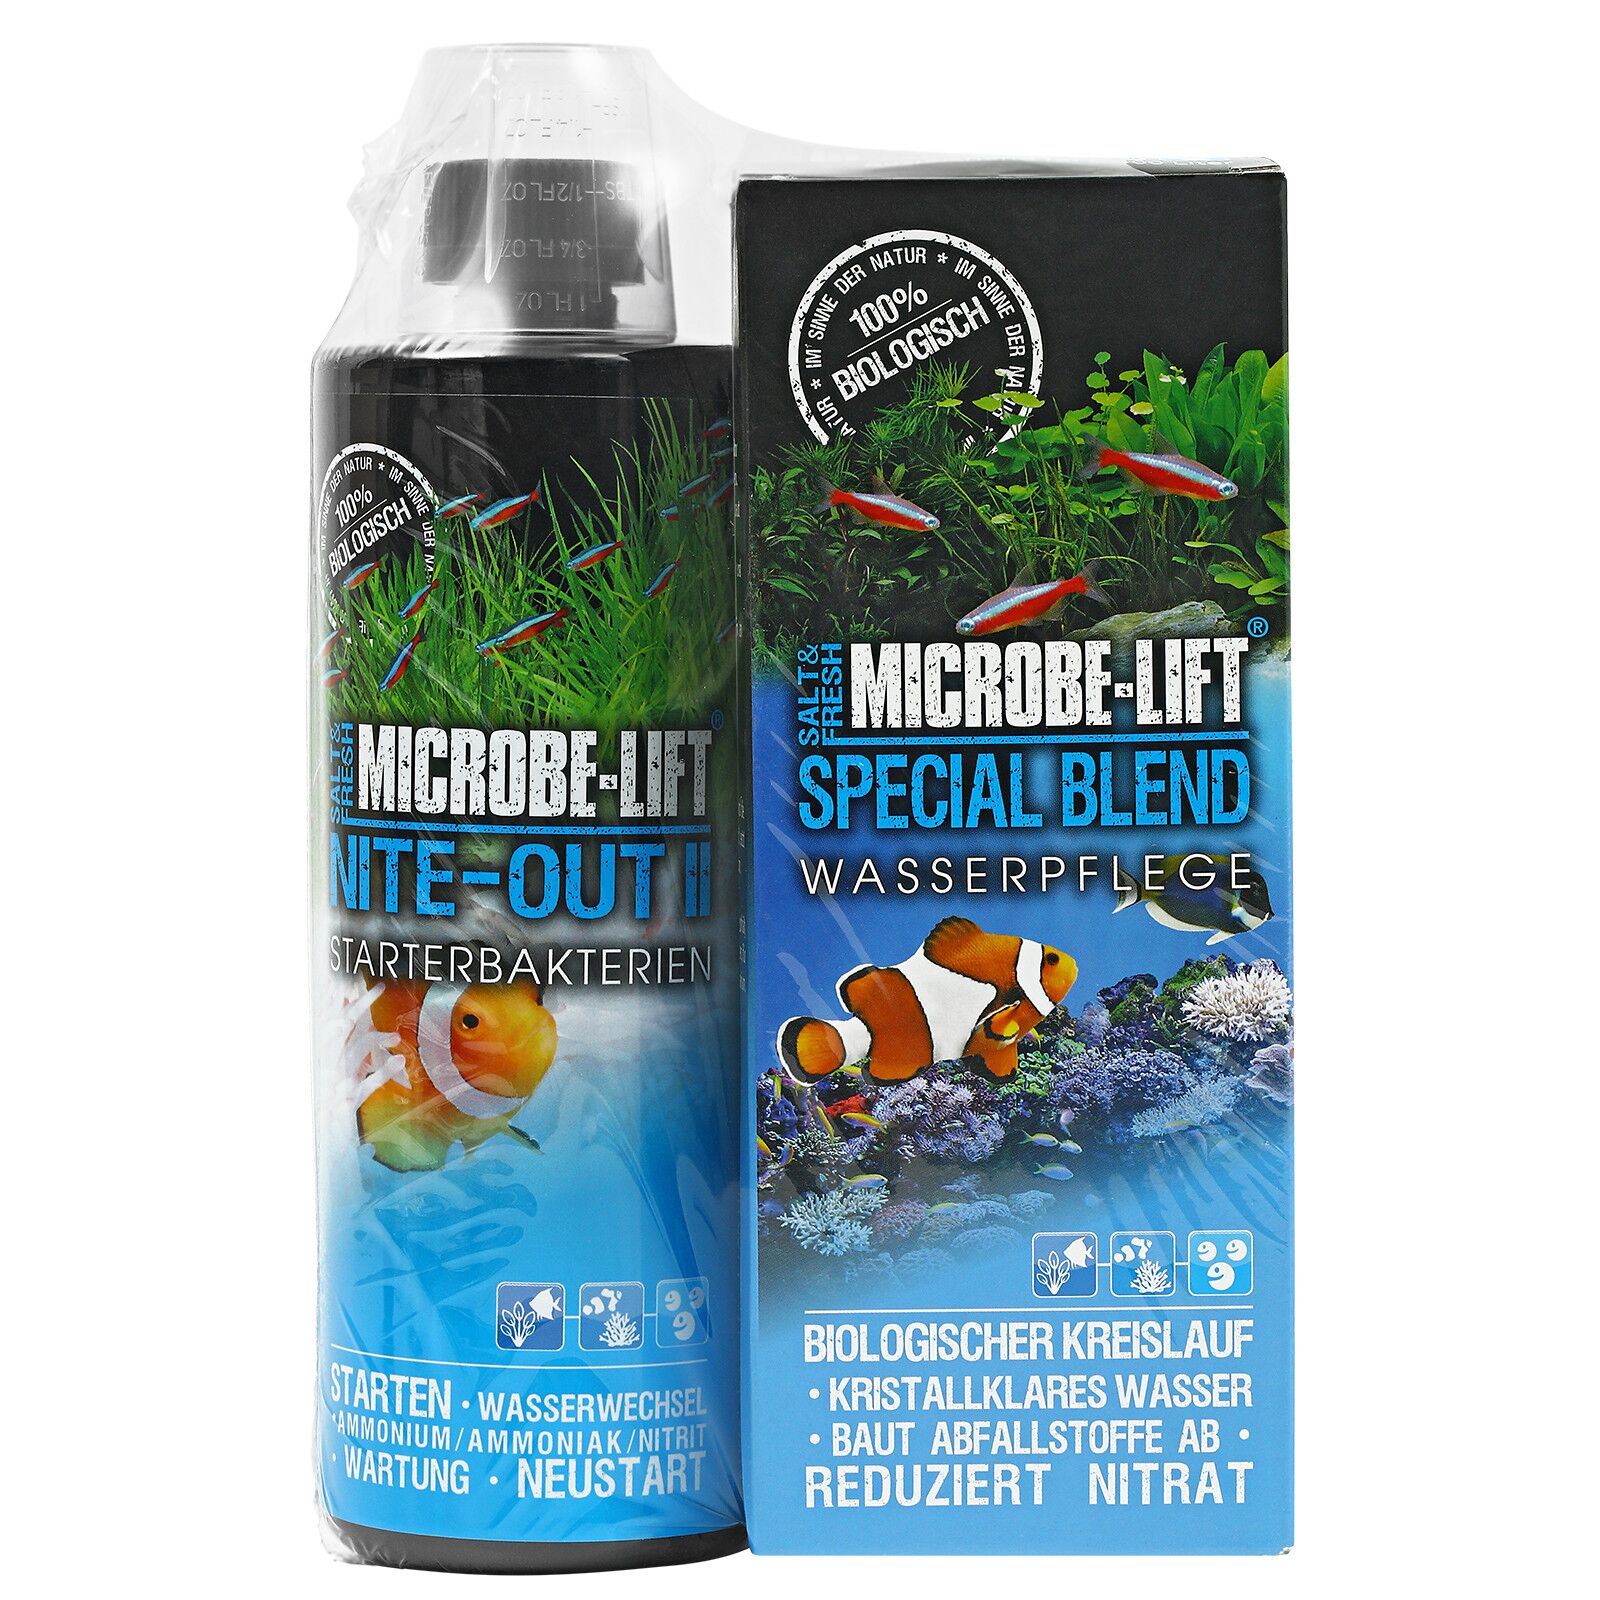 https://www.aquasabi.com/media/image/product/26236/lg/microbe-lift-special-blend-nite-out-ii-set.jpg